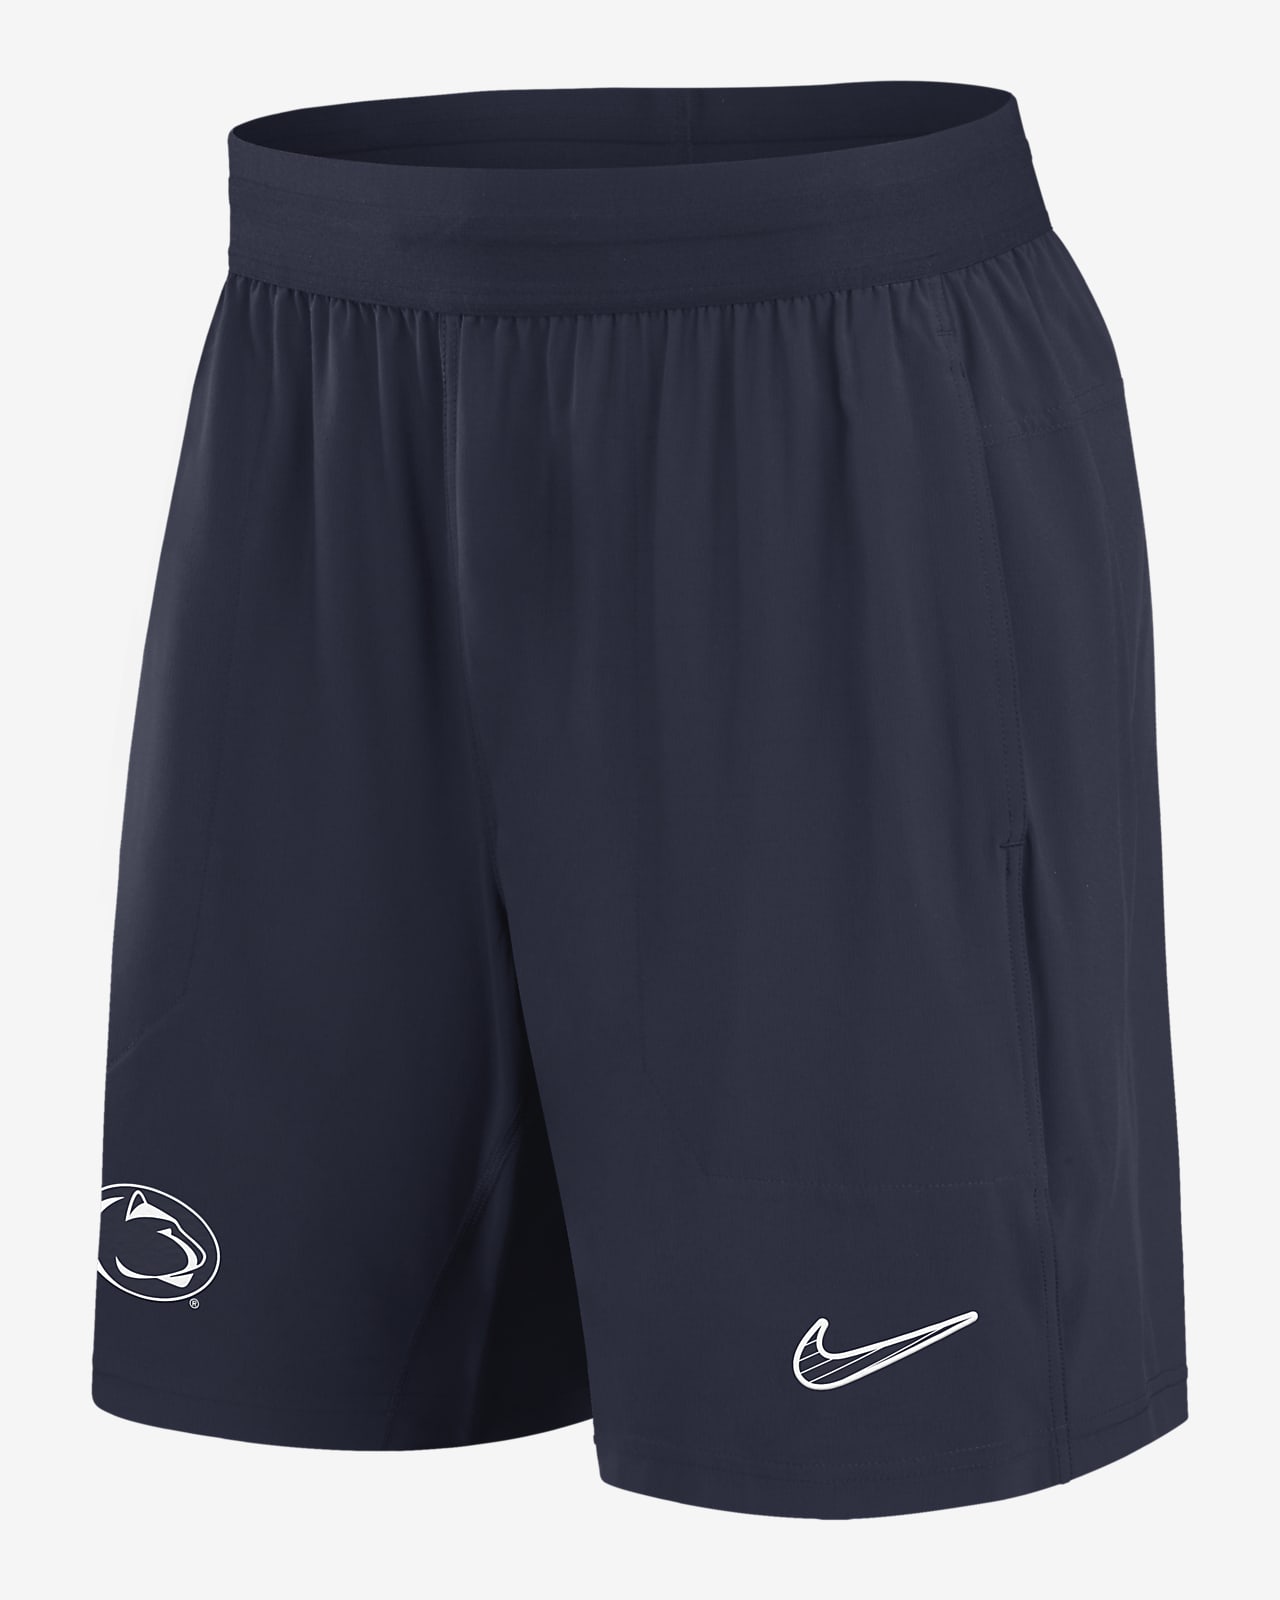 Shorts universitarios Nike Dri-FIT para hombre Penn State Nittany Lions Sideline